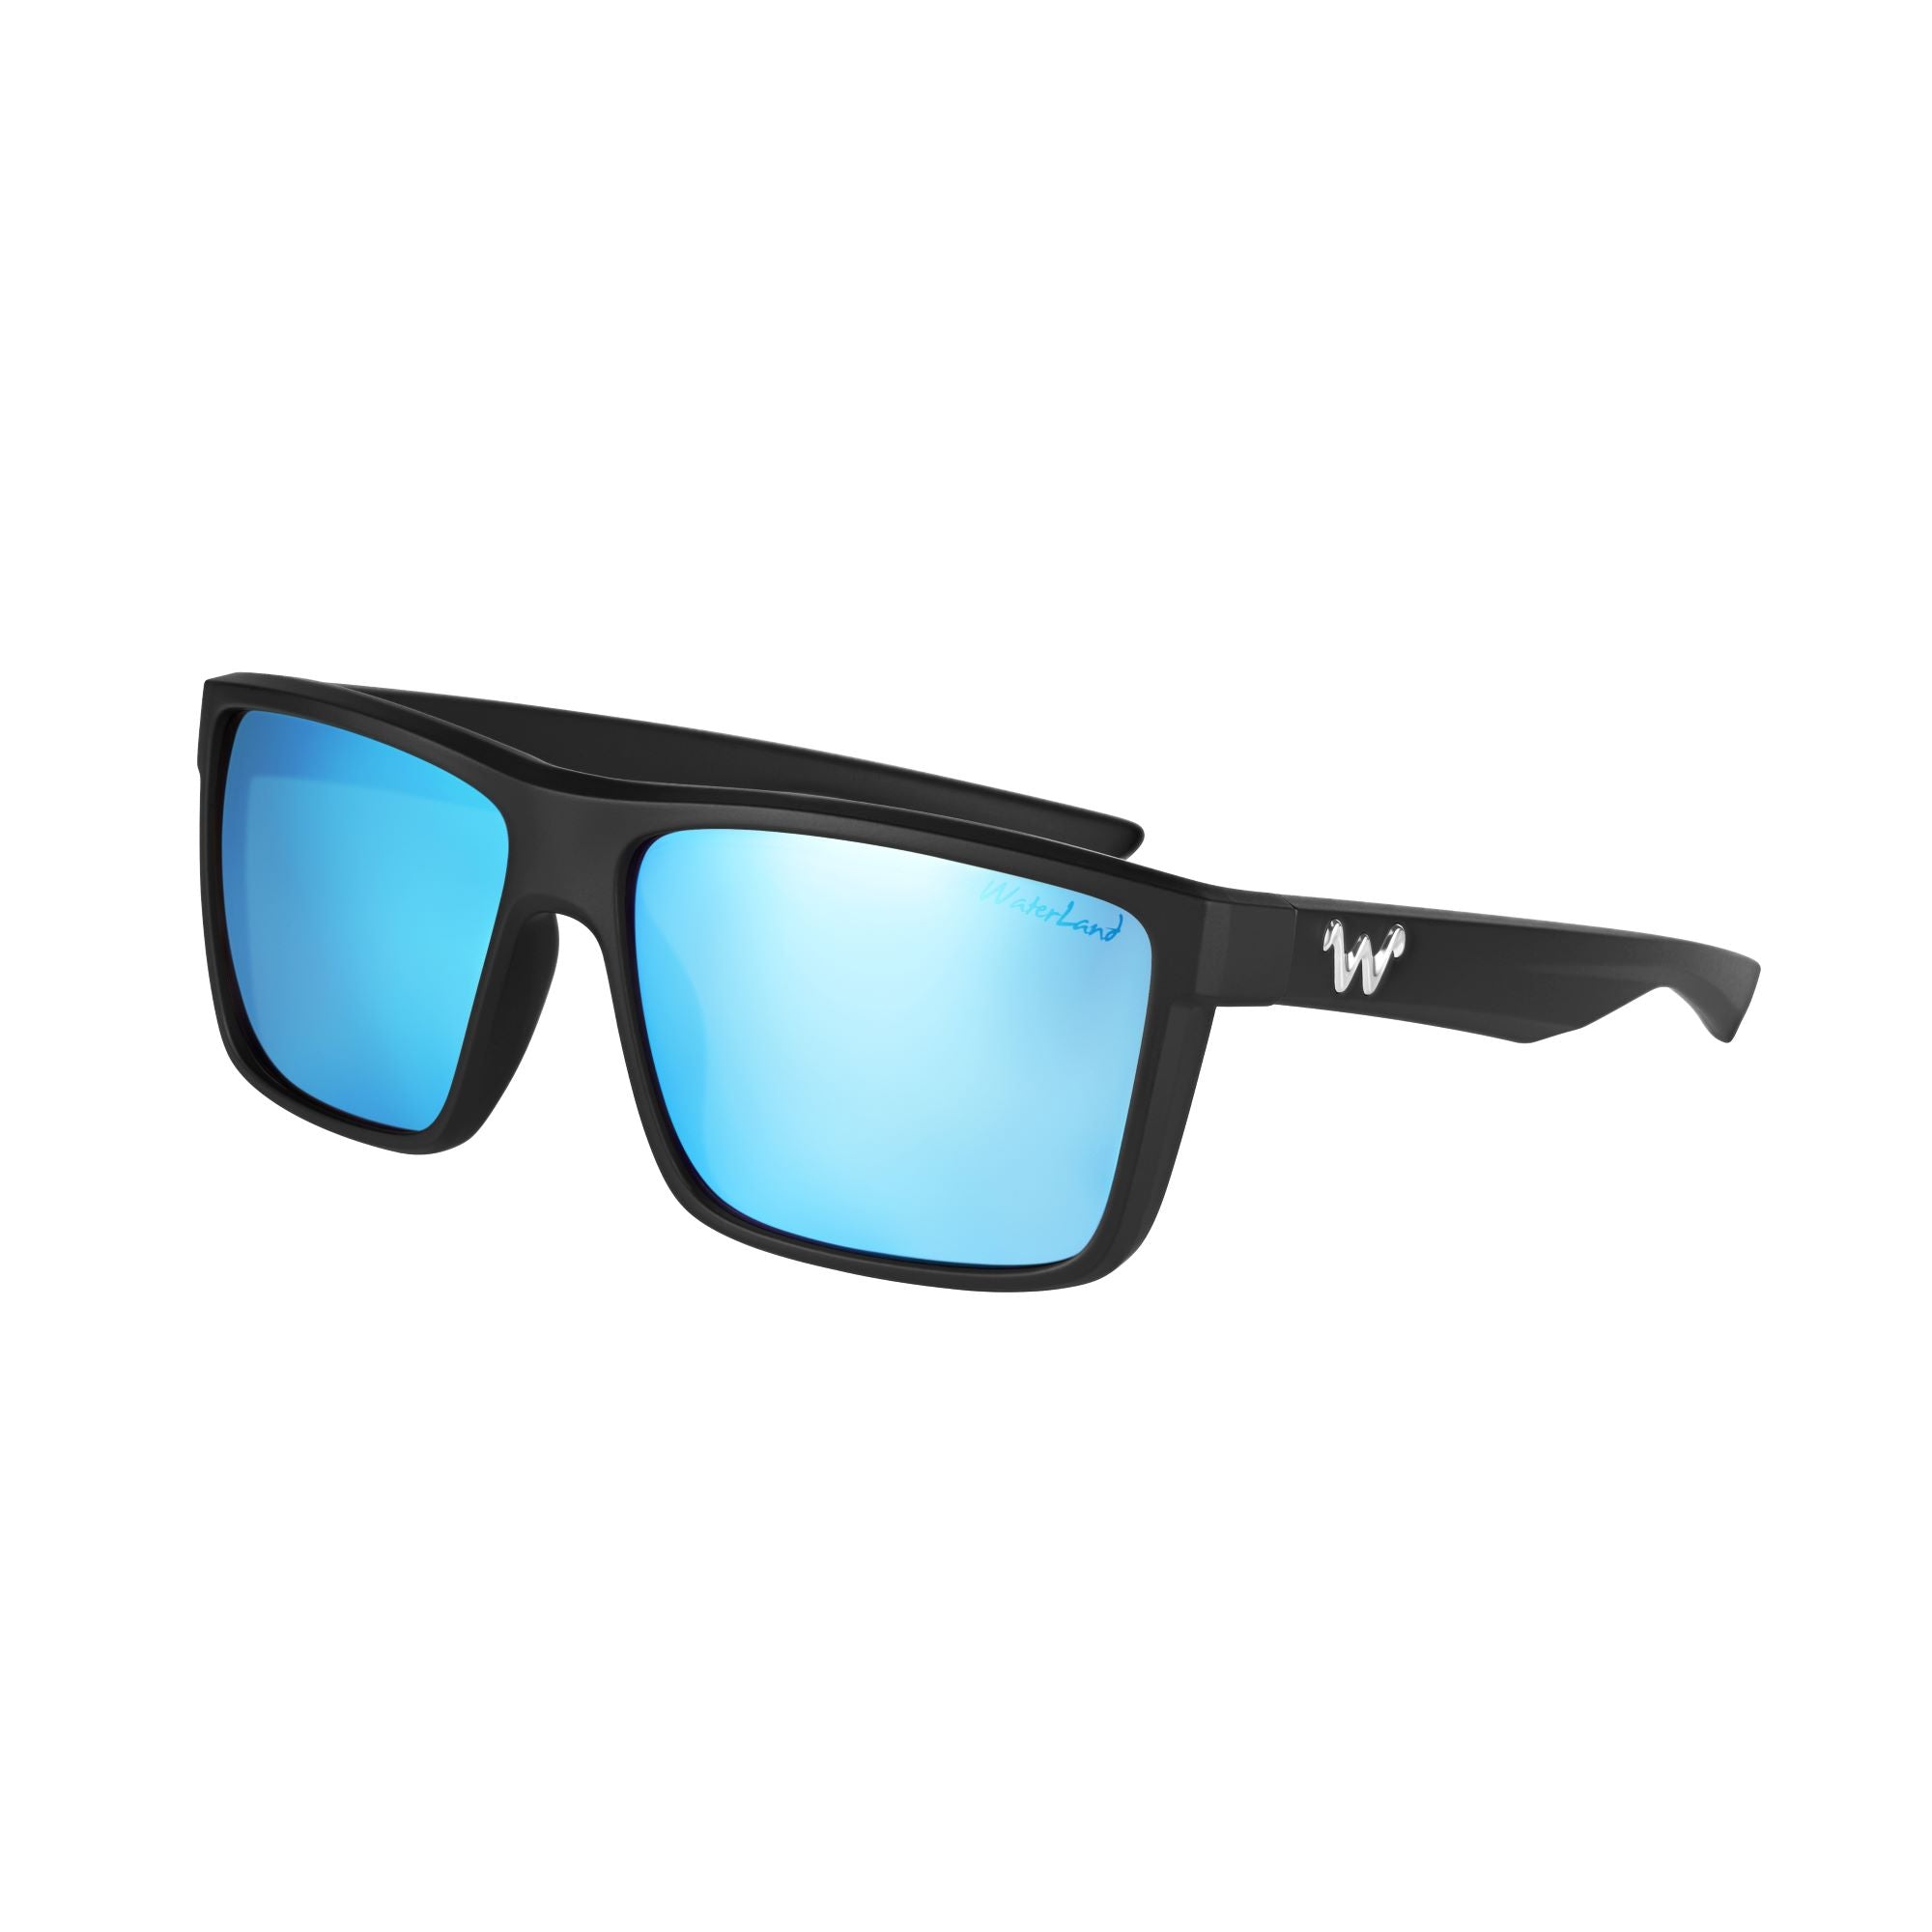 Waterland Slaunch Polarized Sunglasses Black - Blue Mirror